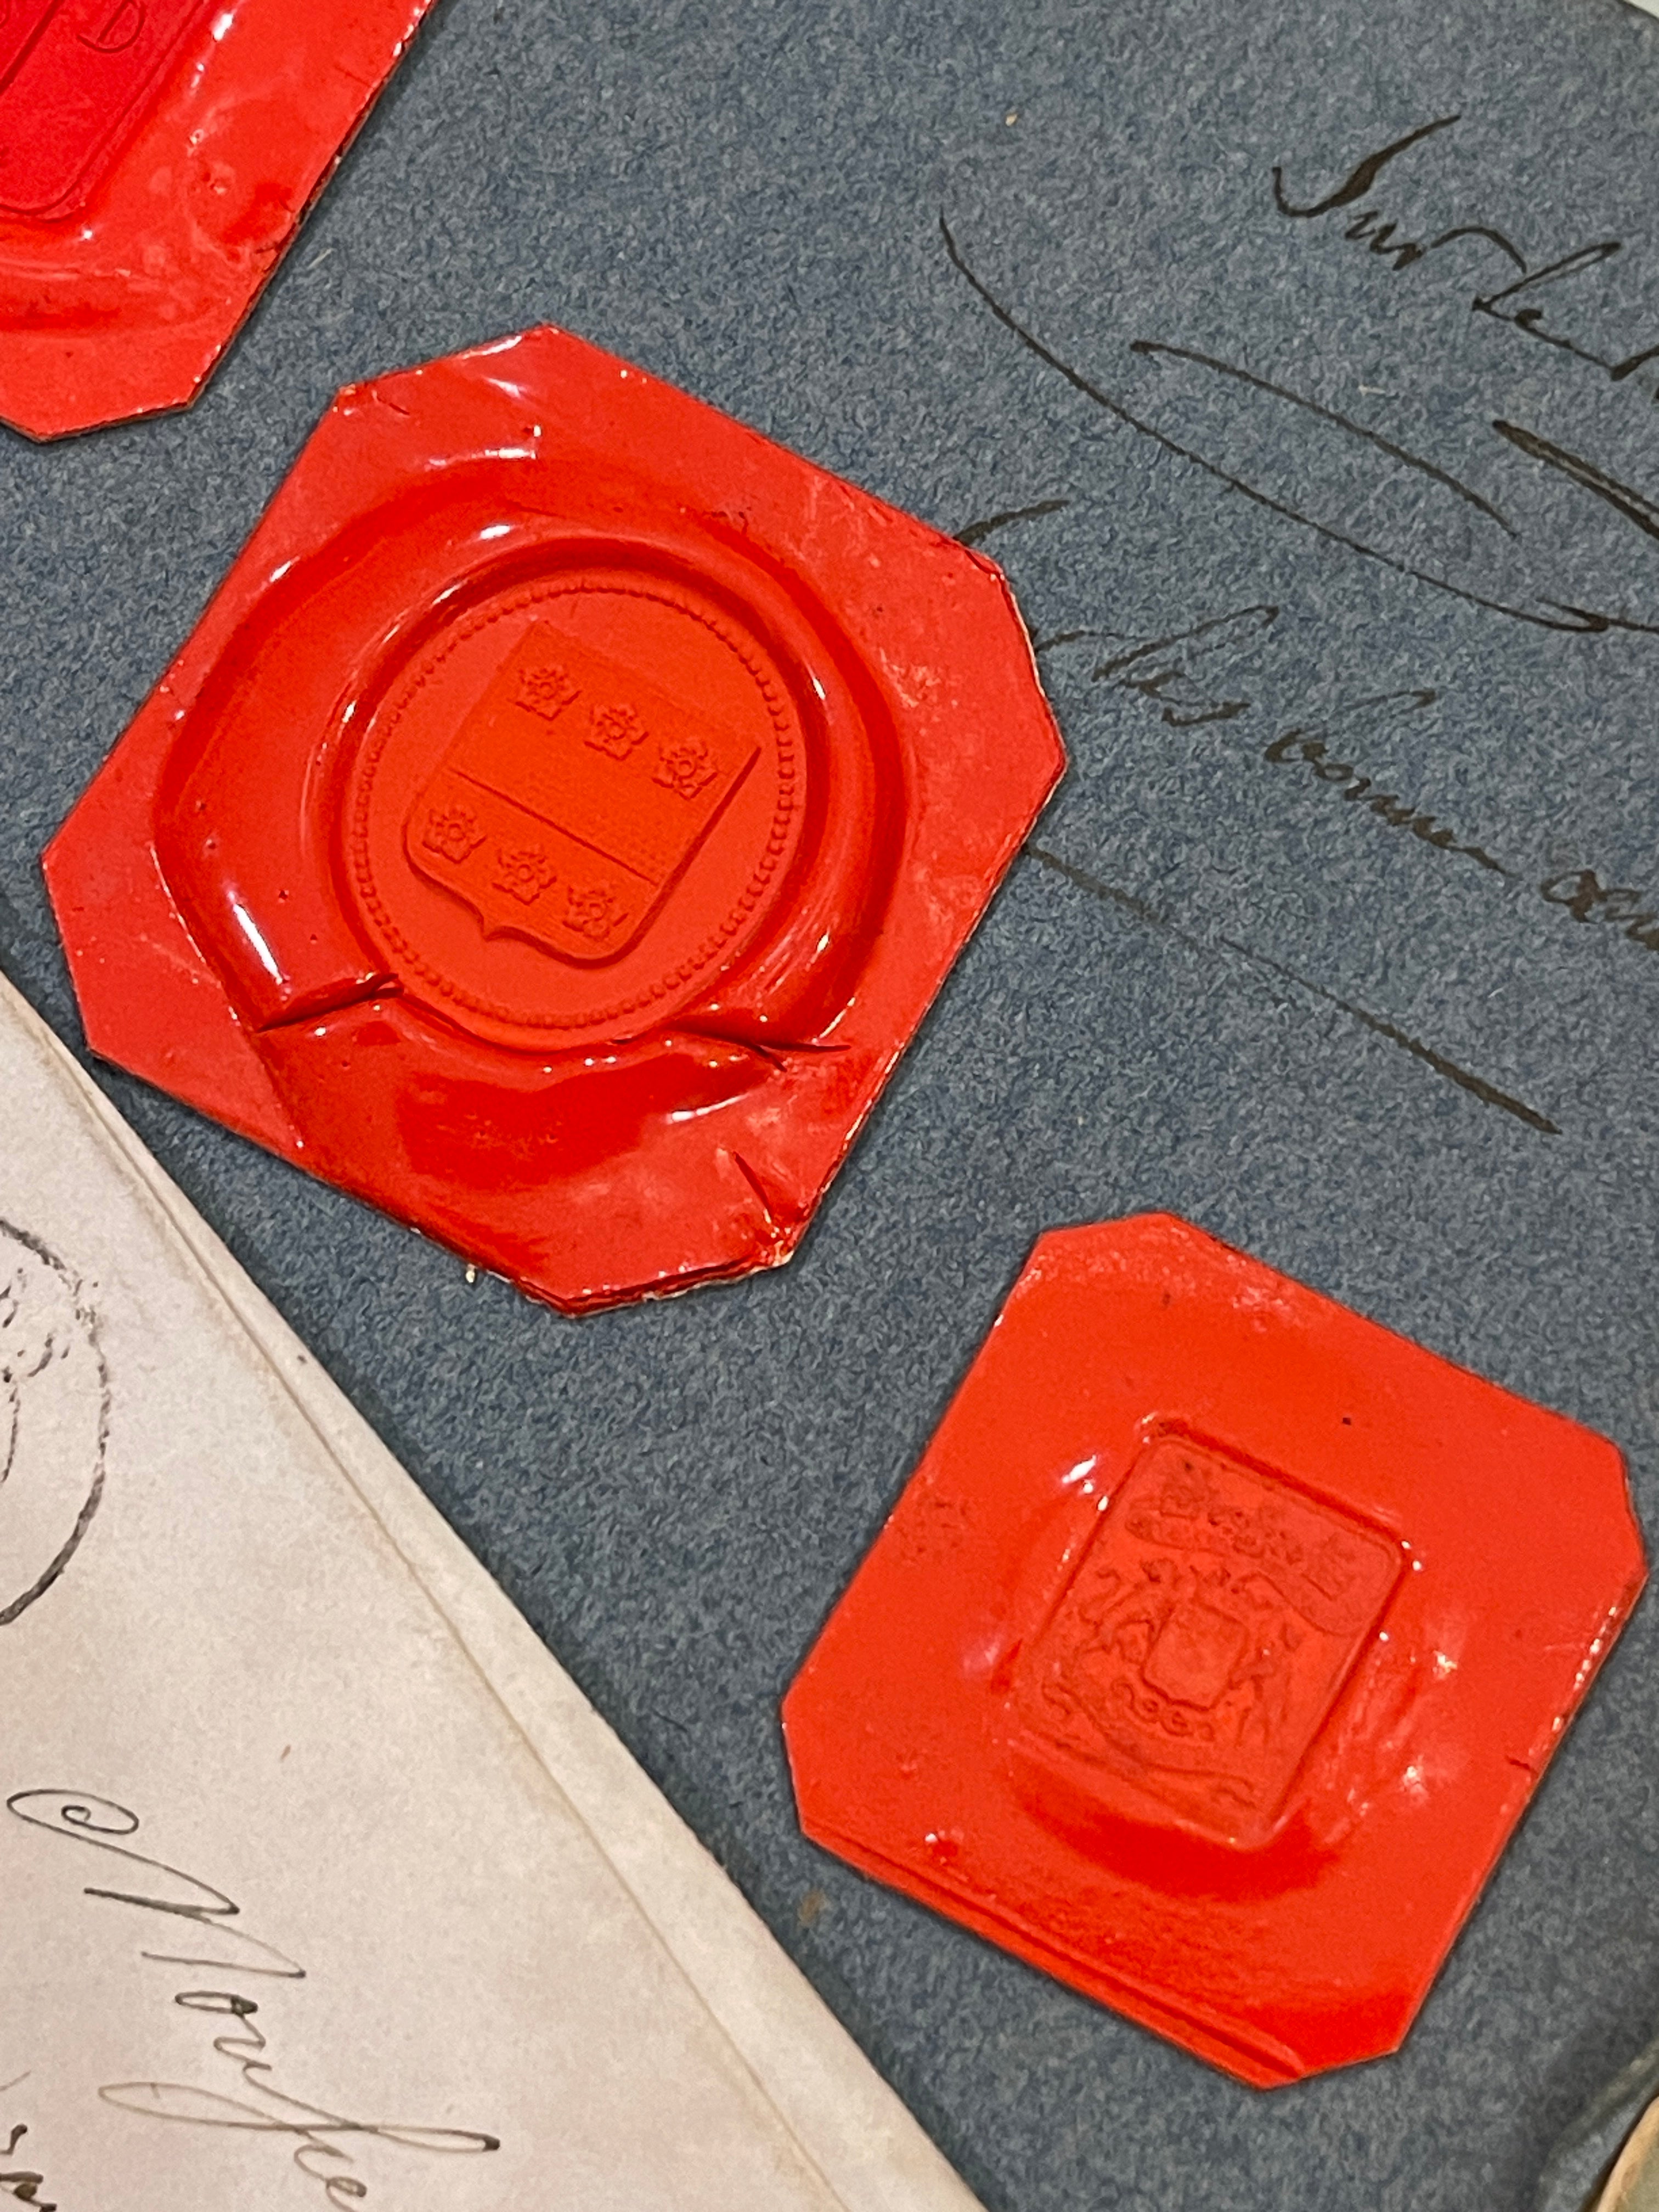 Rare Red Wax Seal Impressions - L